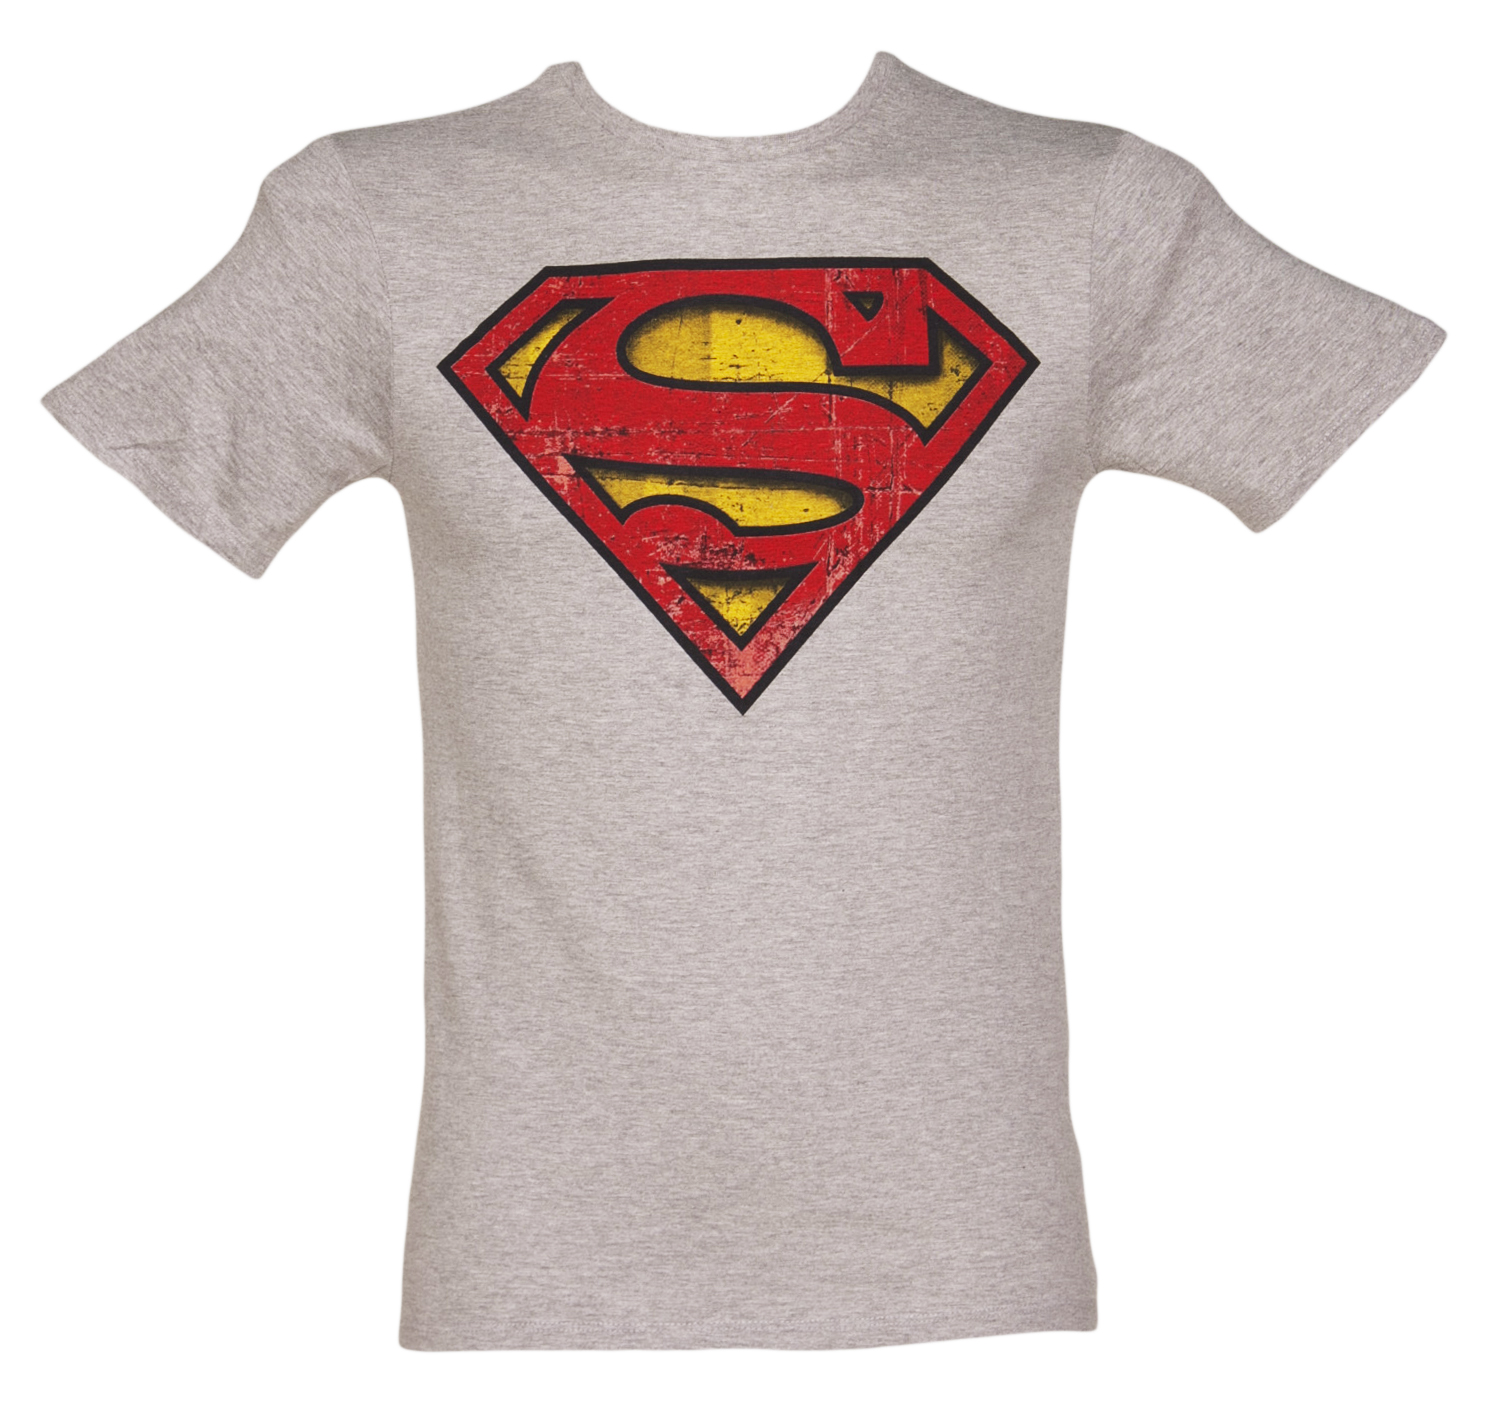 Mens Grey Marl Distressed Superman Logo T-Shirt